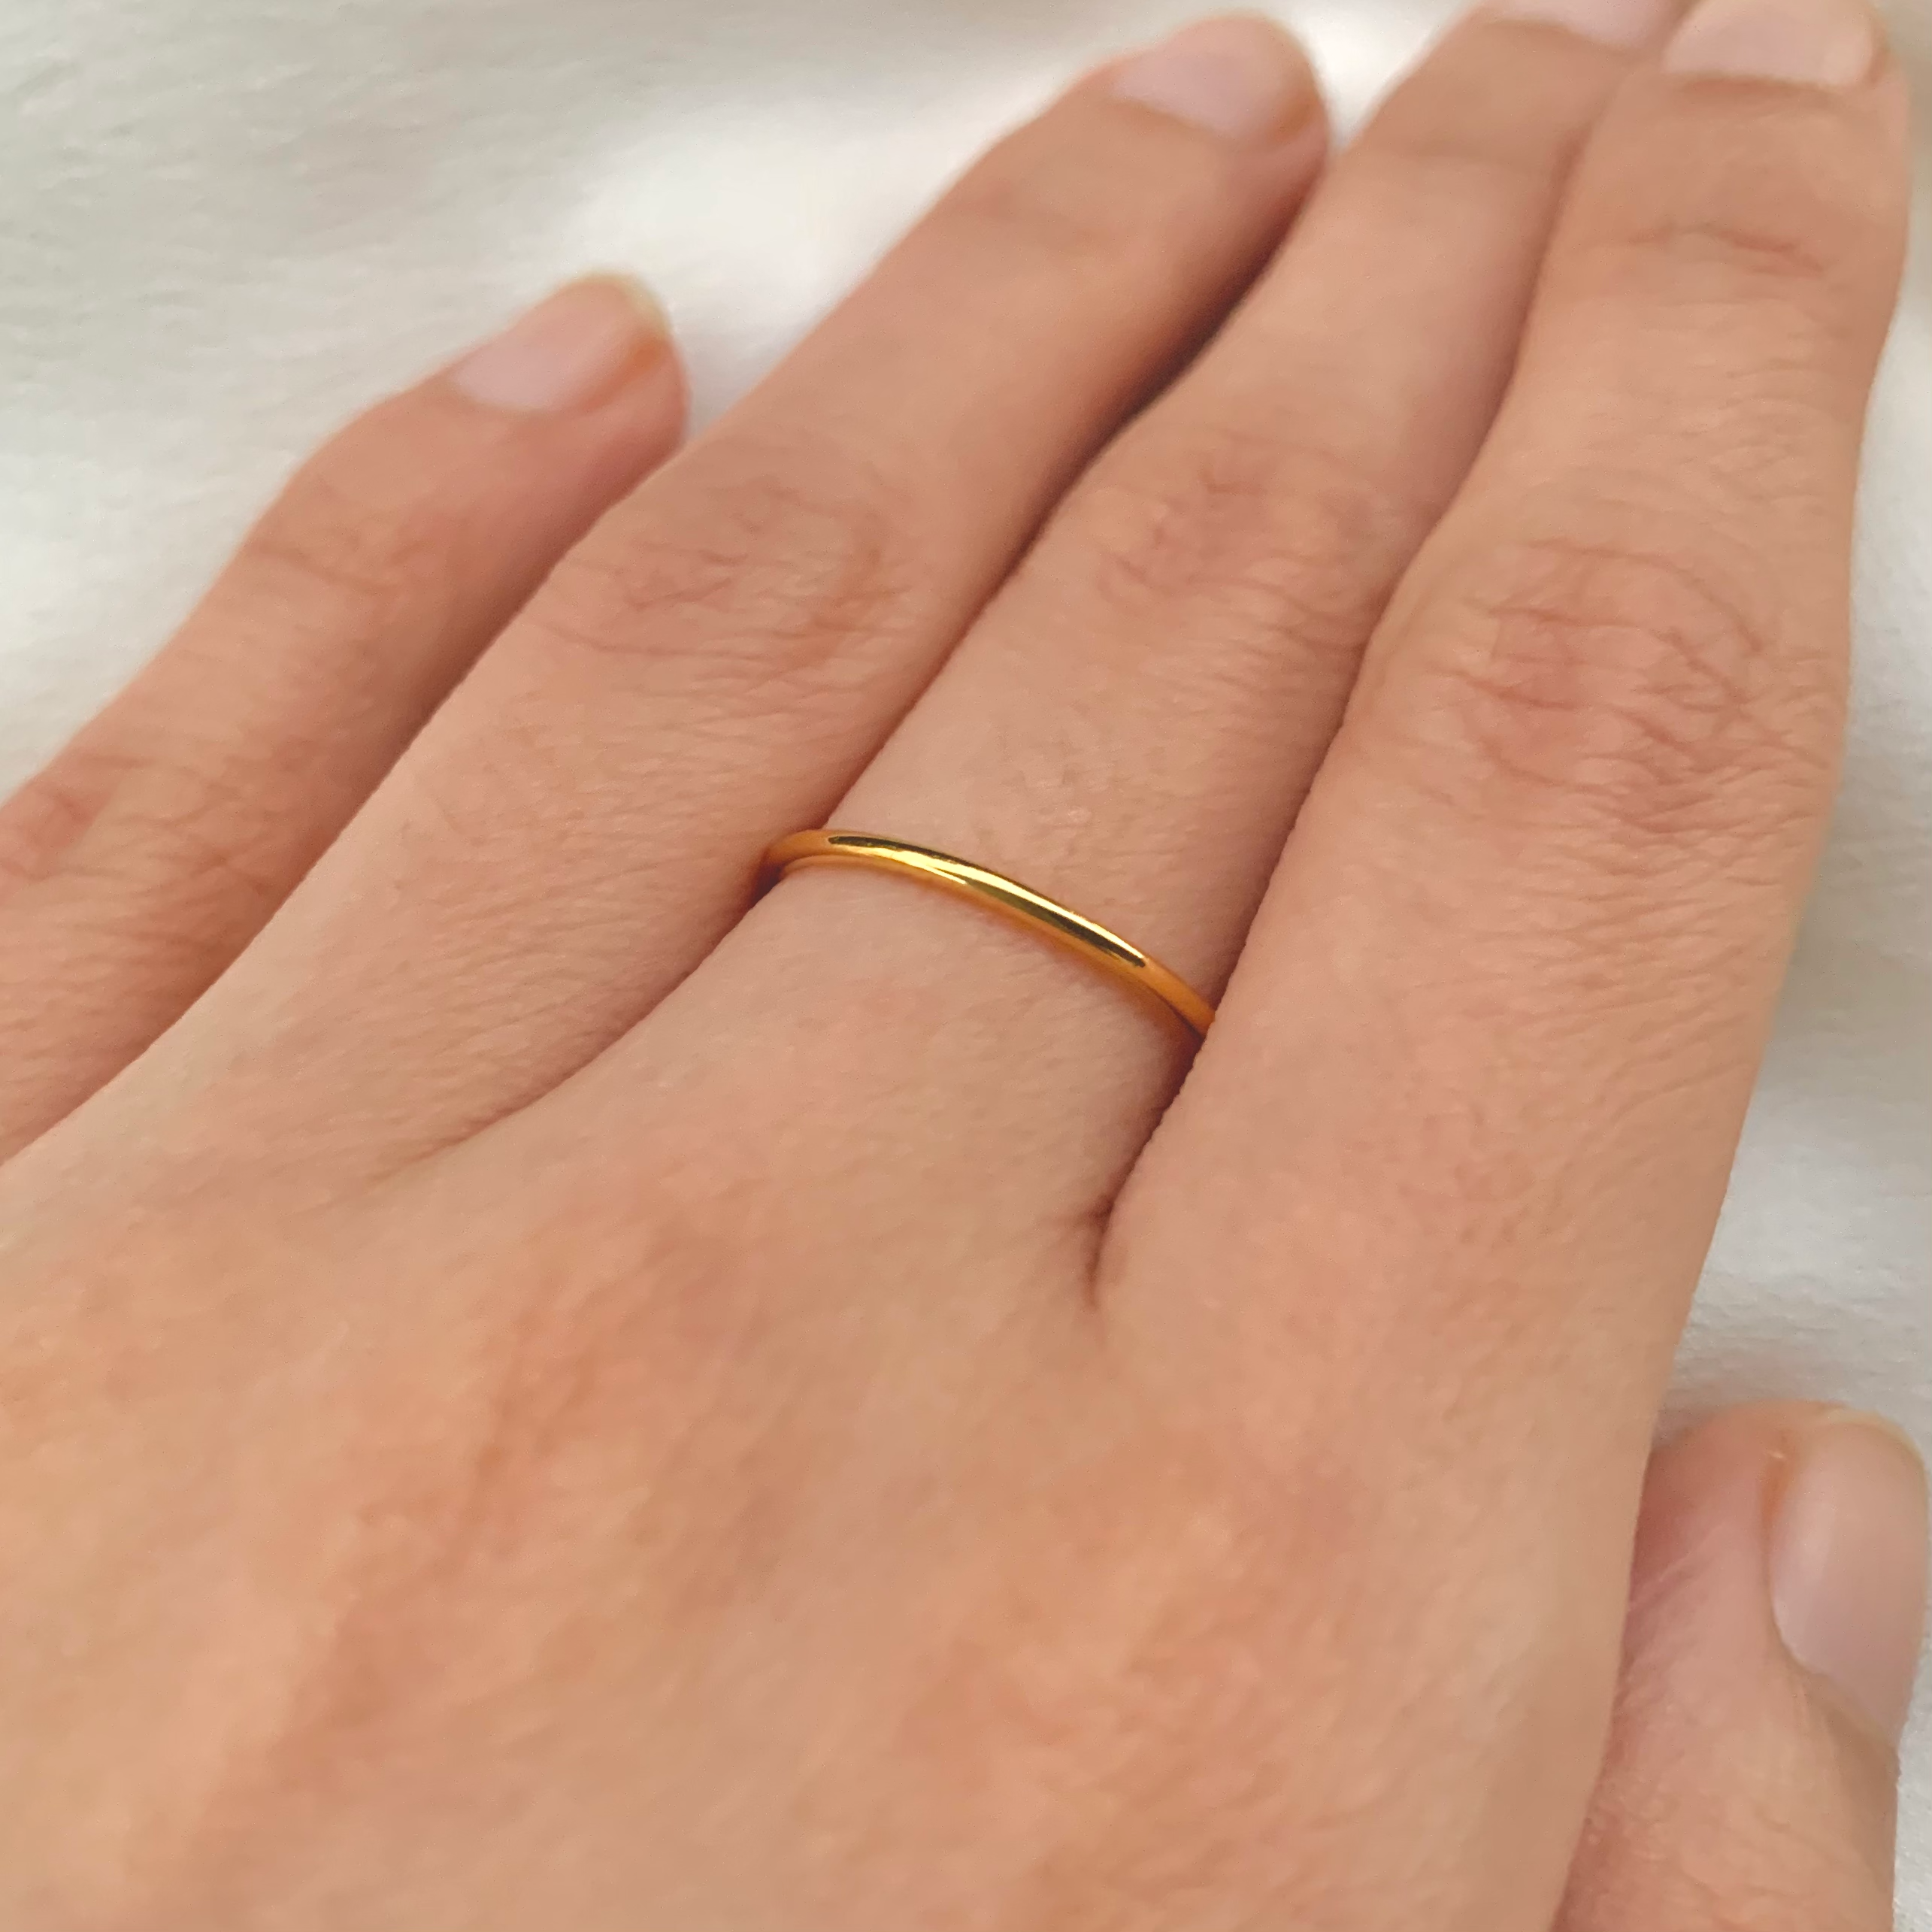 New Hallmark Gold Ring Designs 2023 With Price // Latest Gold Ring Designs  With Price 👌👌👌 - YouTube